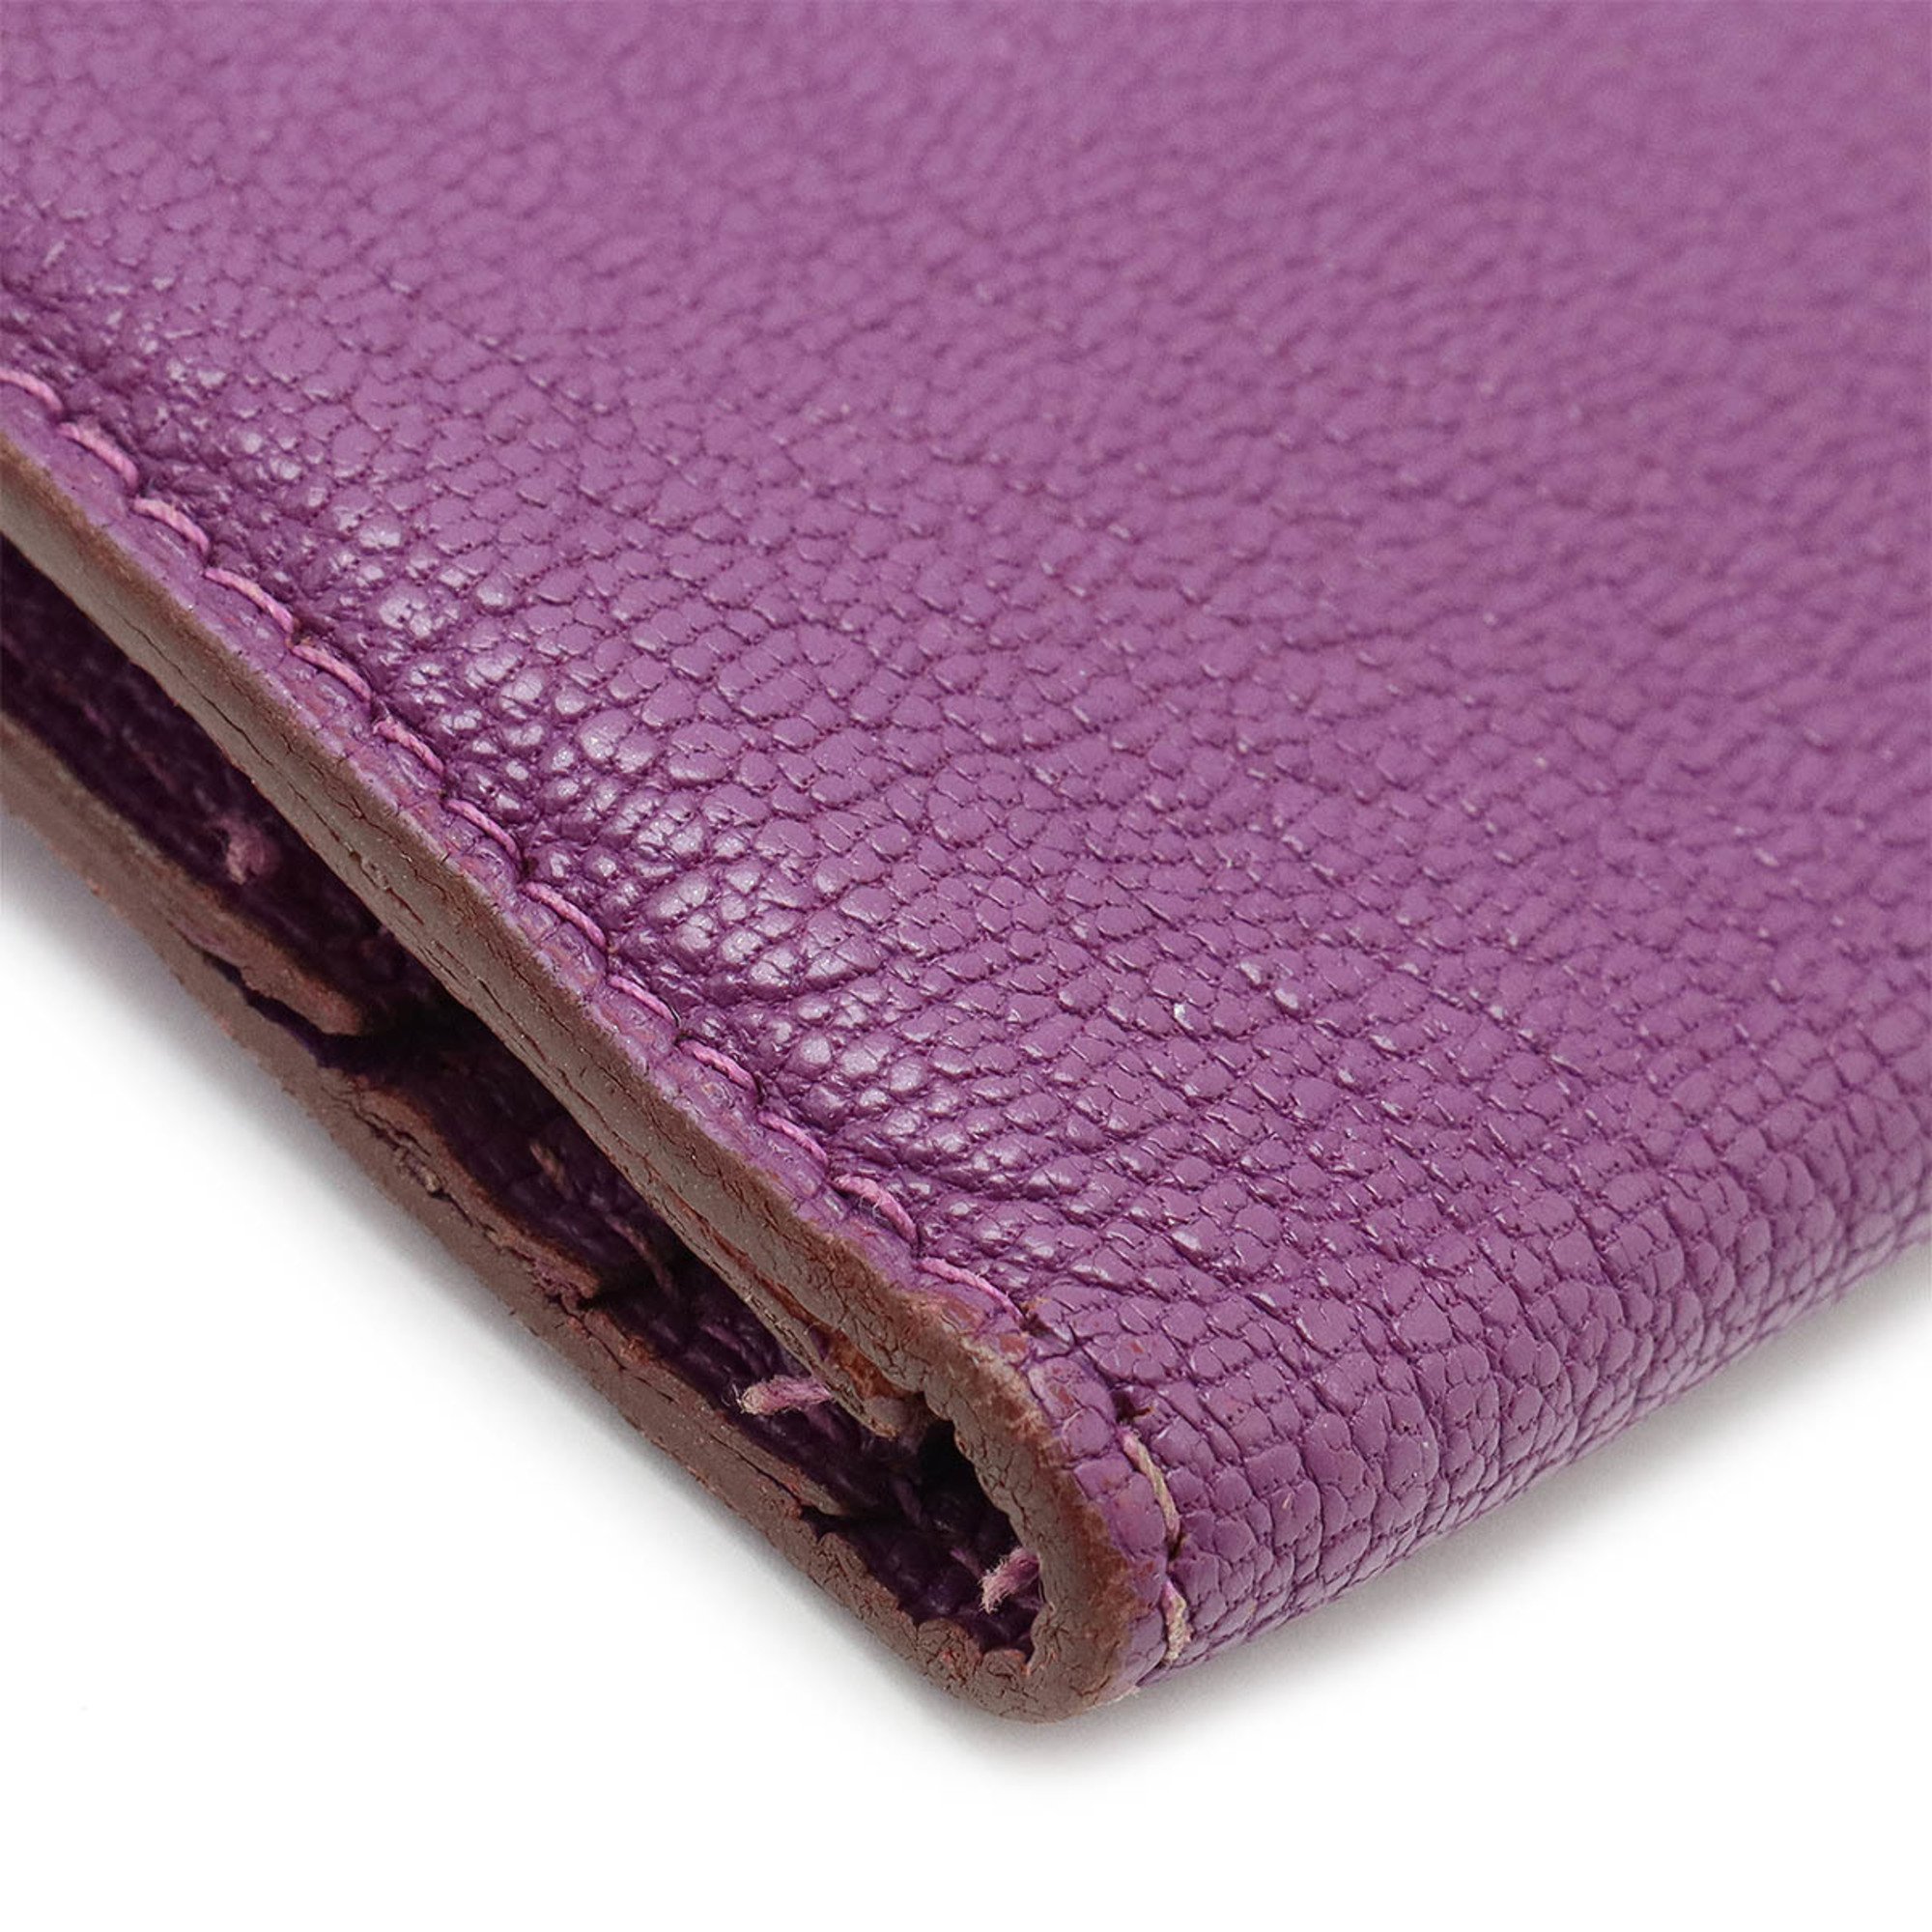 HERMES Bearn Classic Bi-fold Long Wallet Chevre Leather Purple H Stamp